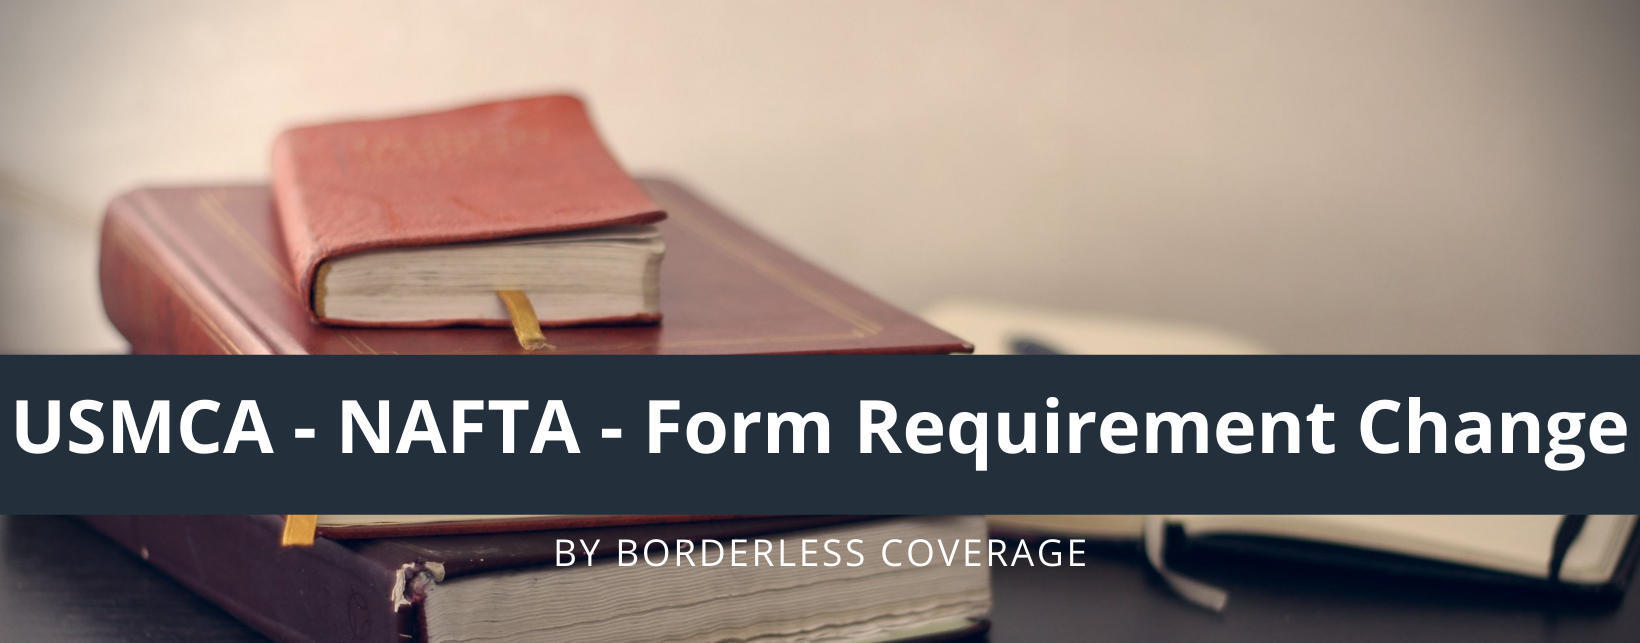 USMCA - NAFTA - Form Requirement Change